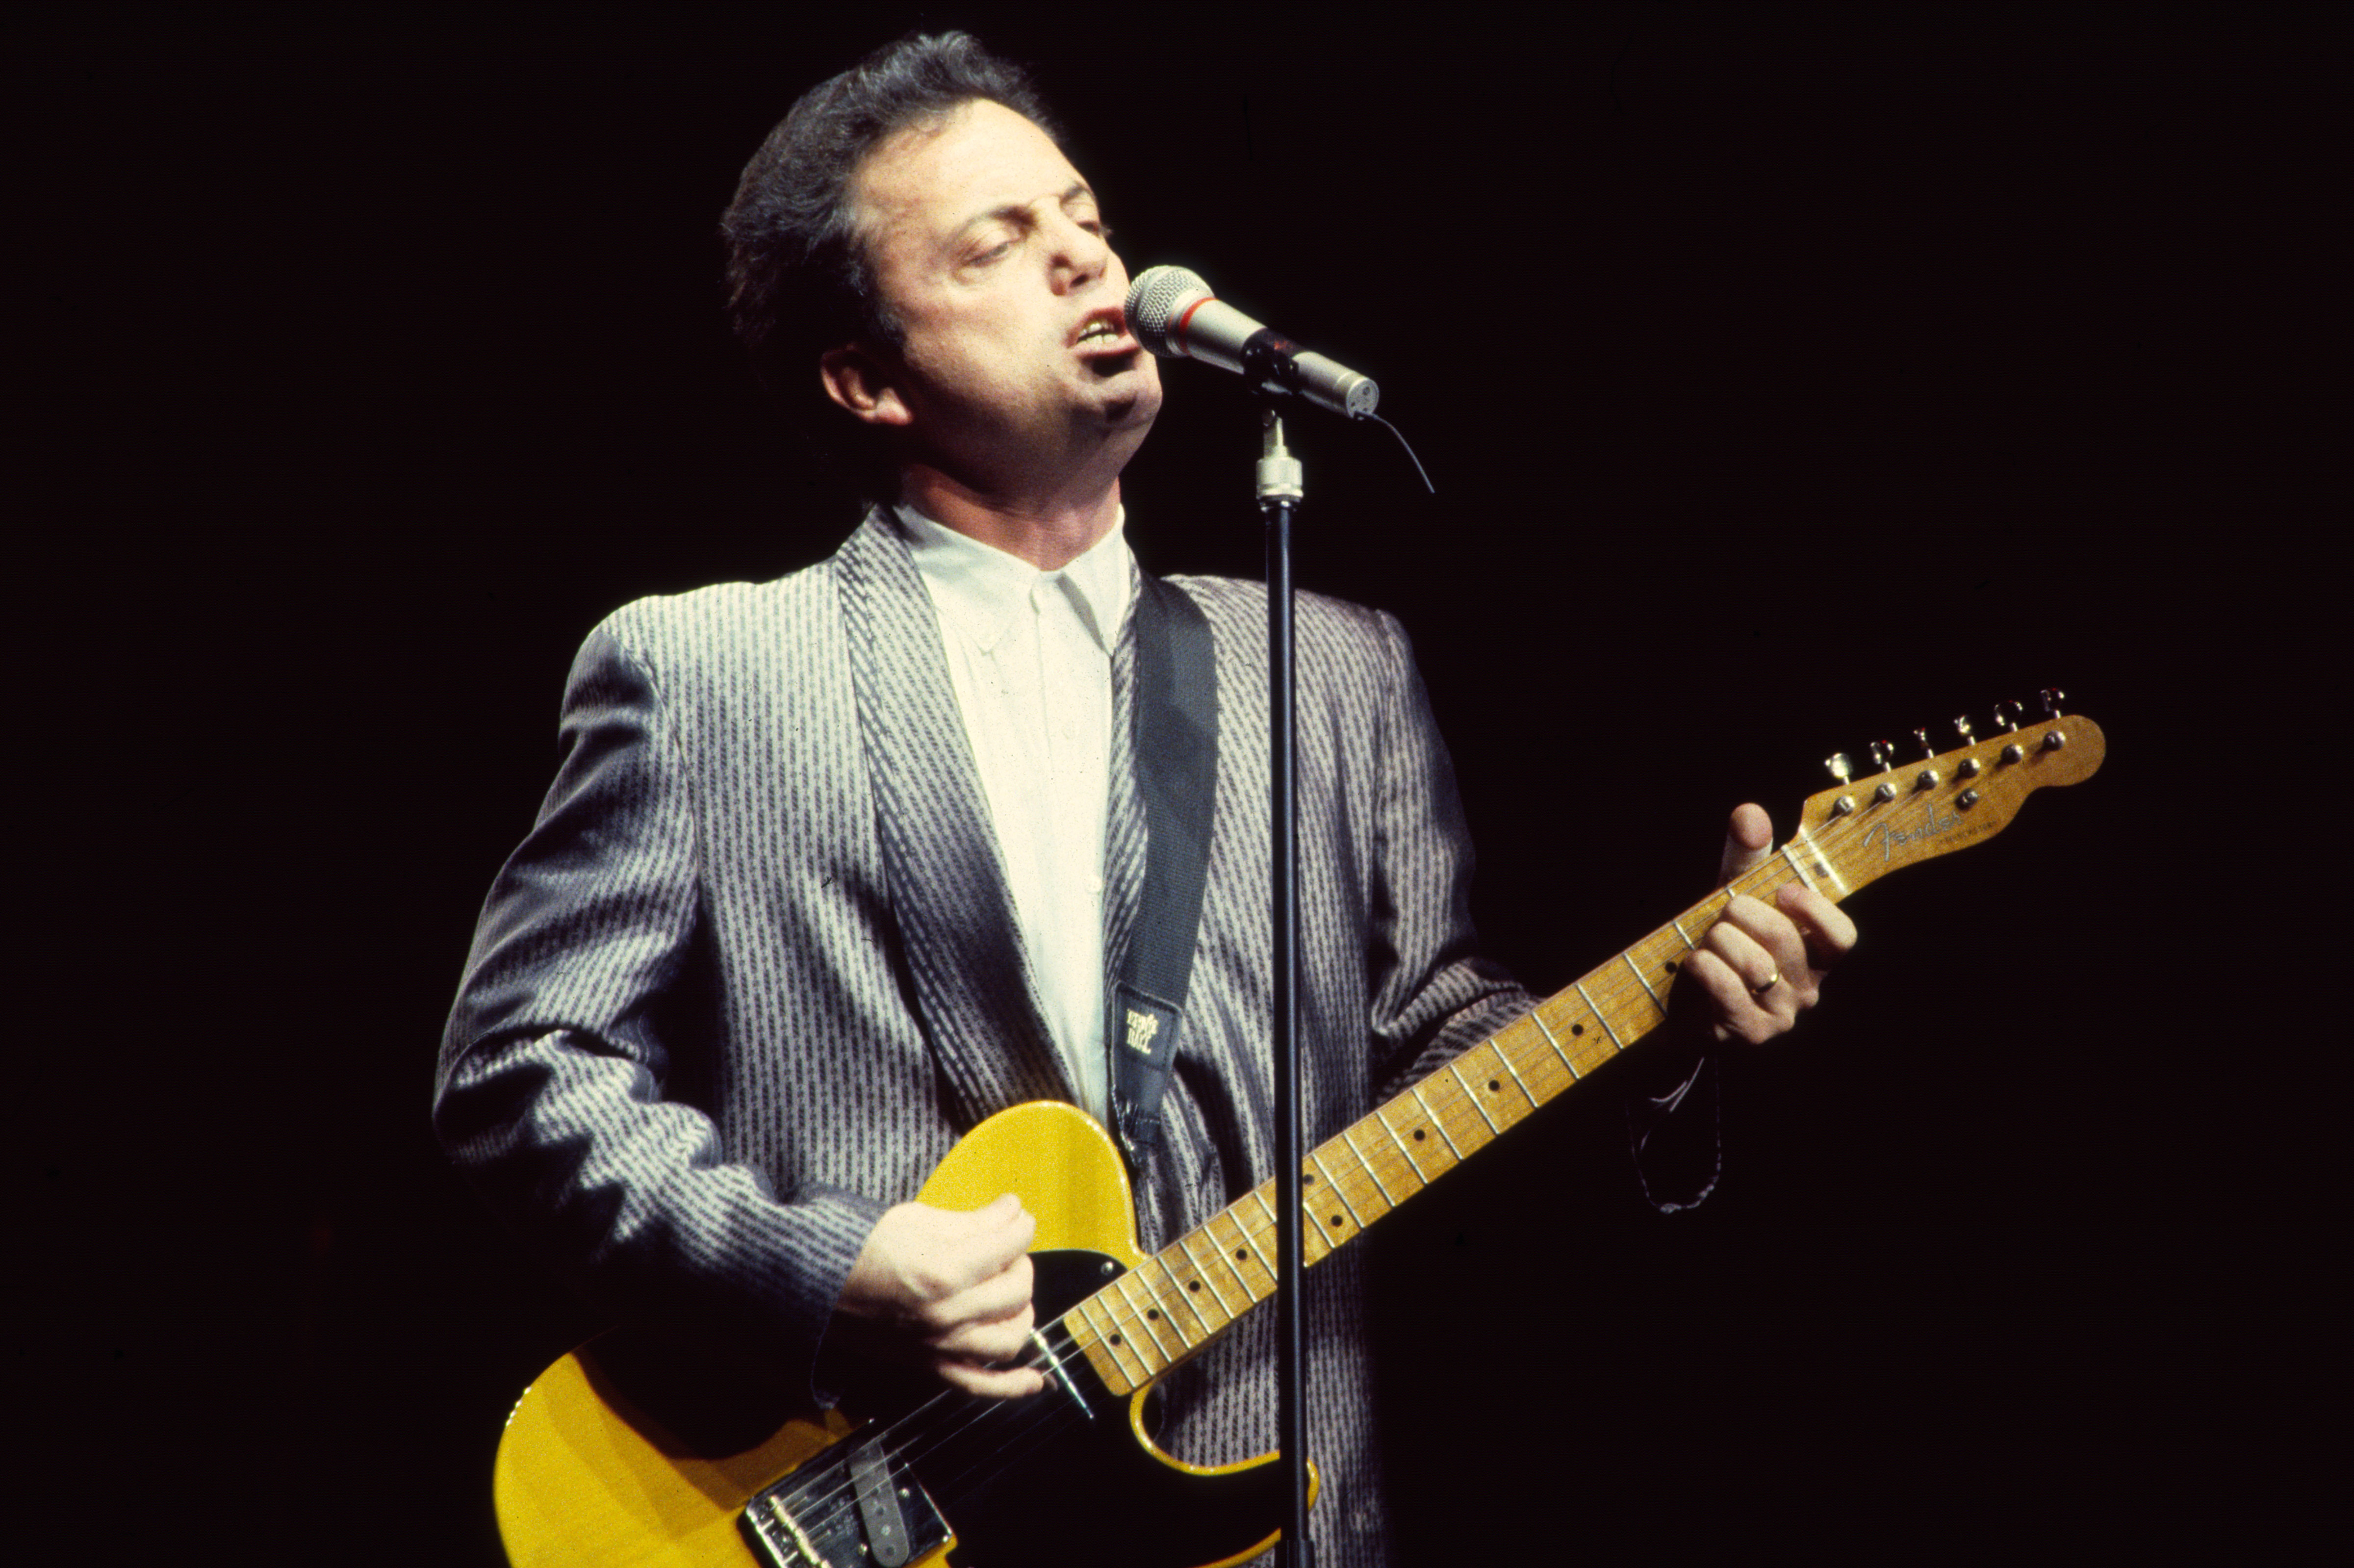 Billy Joel performs at Nassau Veterans Memorial Coliseum in New York on December 12, 1986 | Source: Getty Images